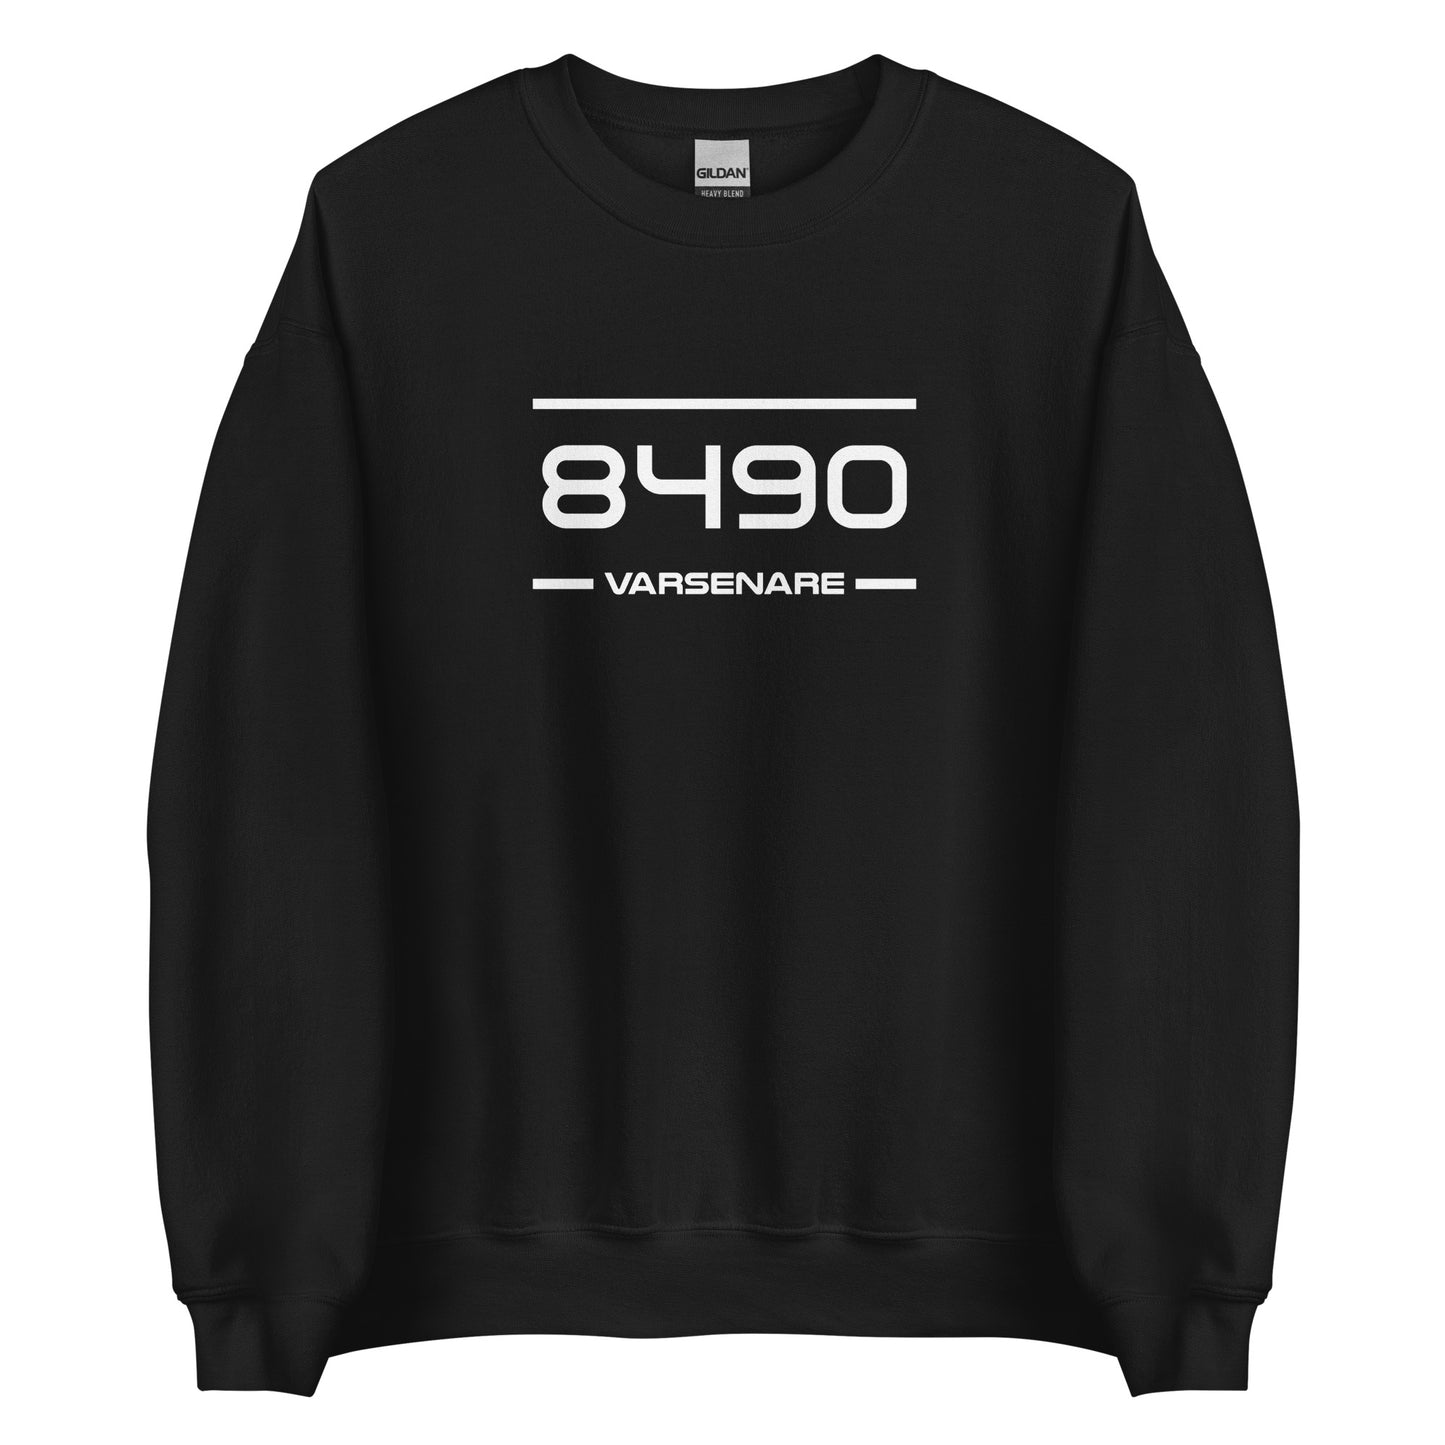 Sweater - 8490 - Varsenare (M/V)